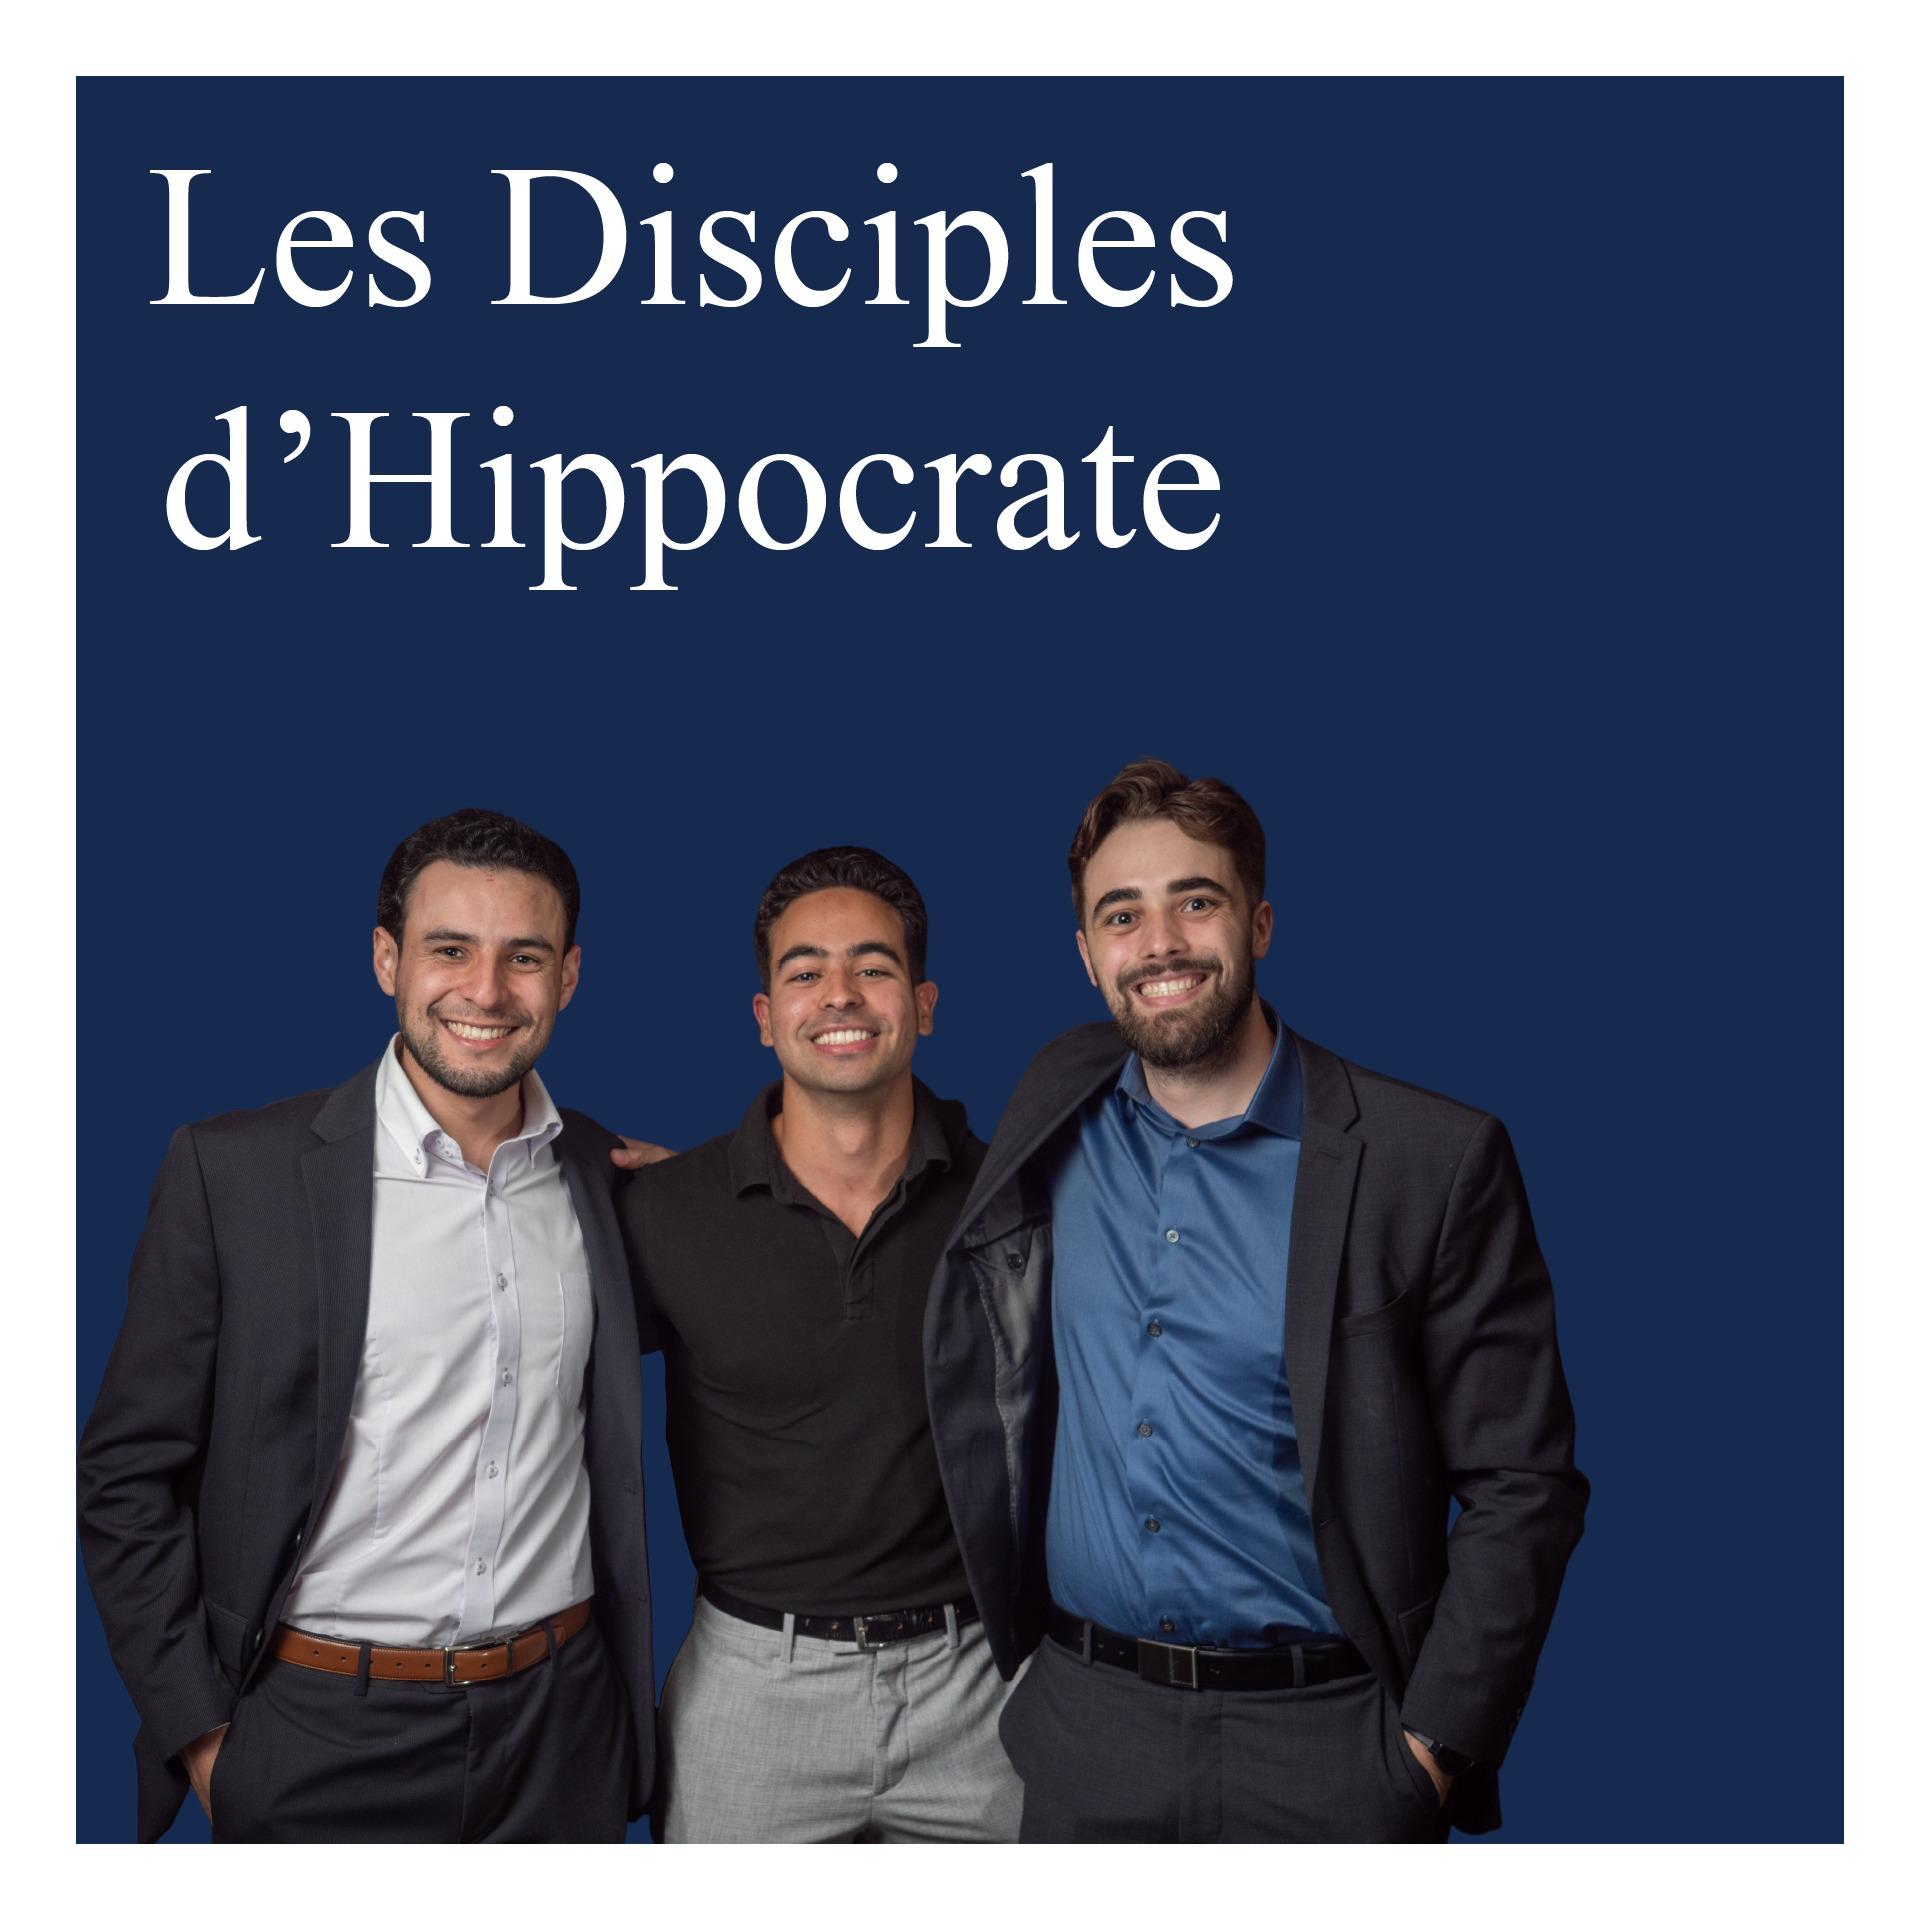 Les Disciples d'Hippocrate